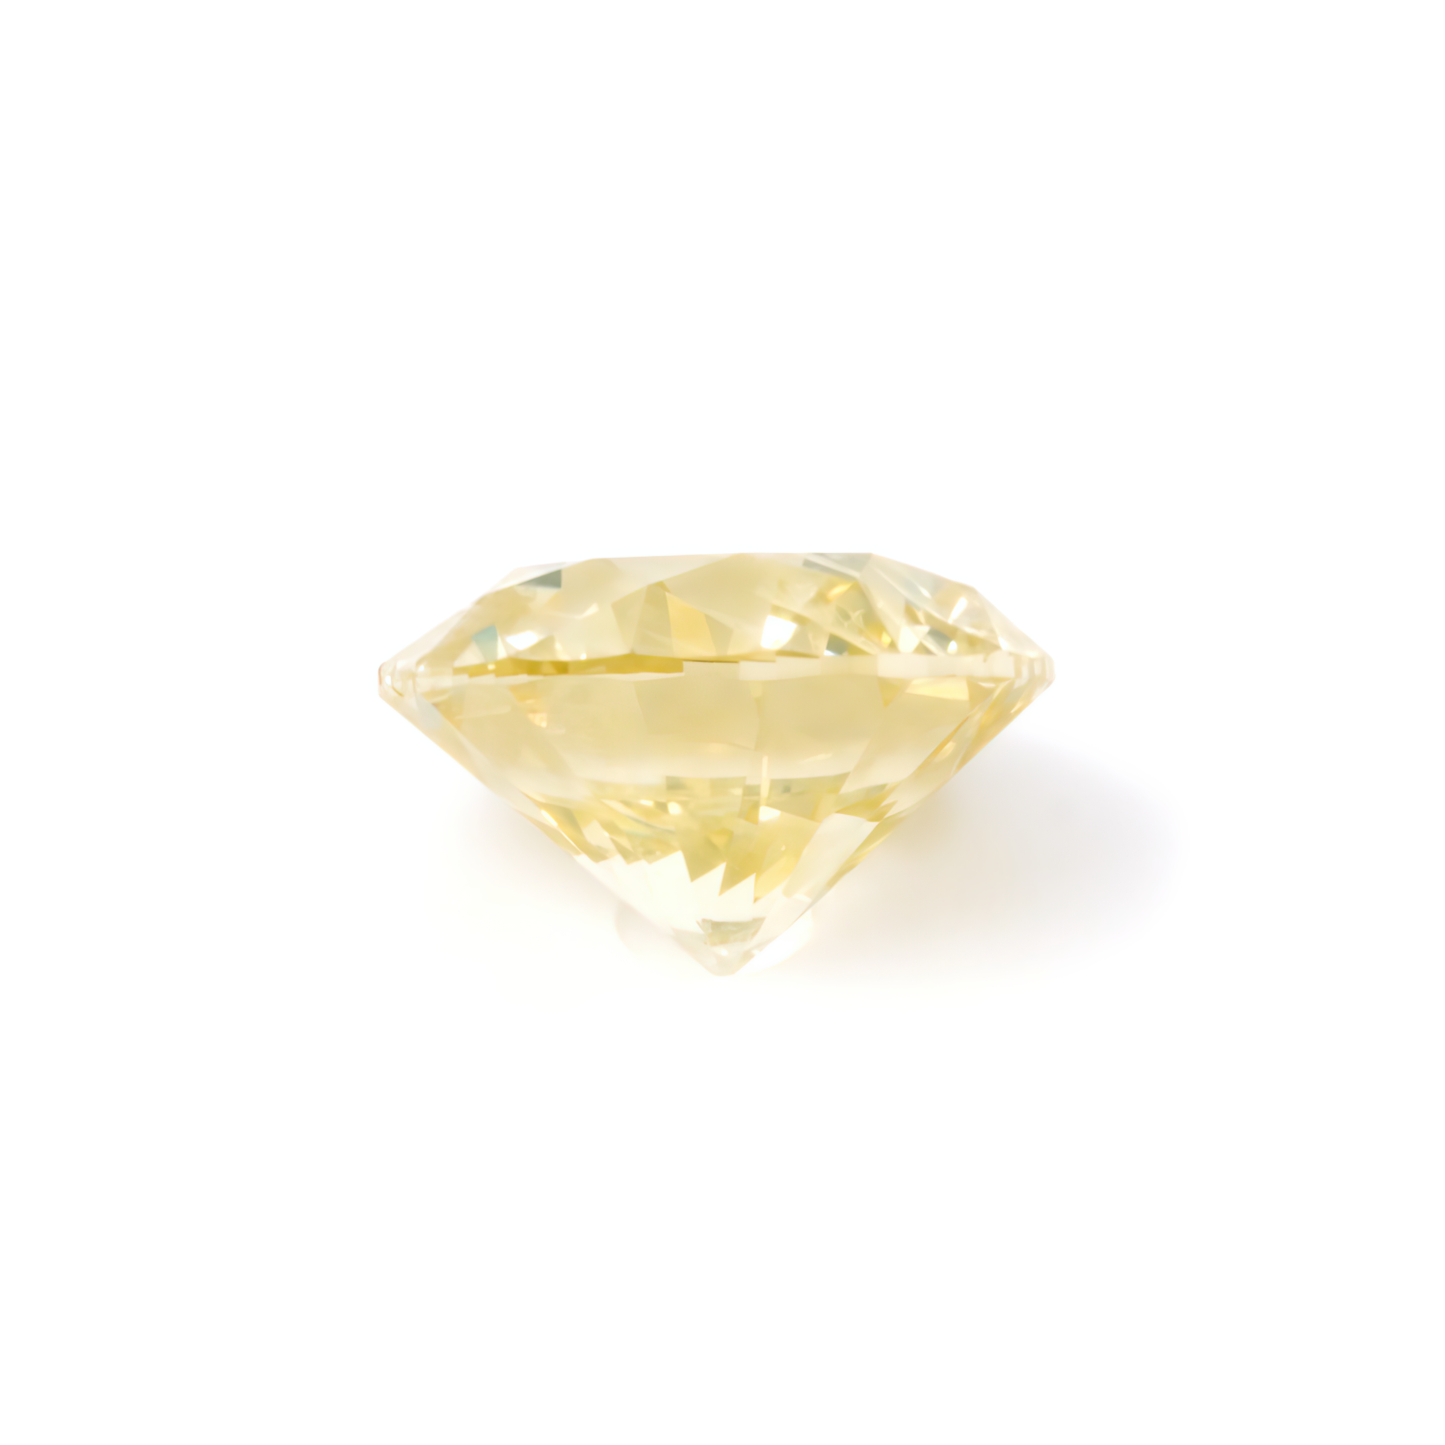 1.05ct Round Brilliant, Fancy Yellow Diamond - 6.44 - 6.51 x 3.99mm